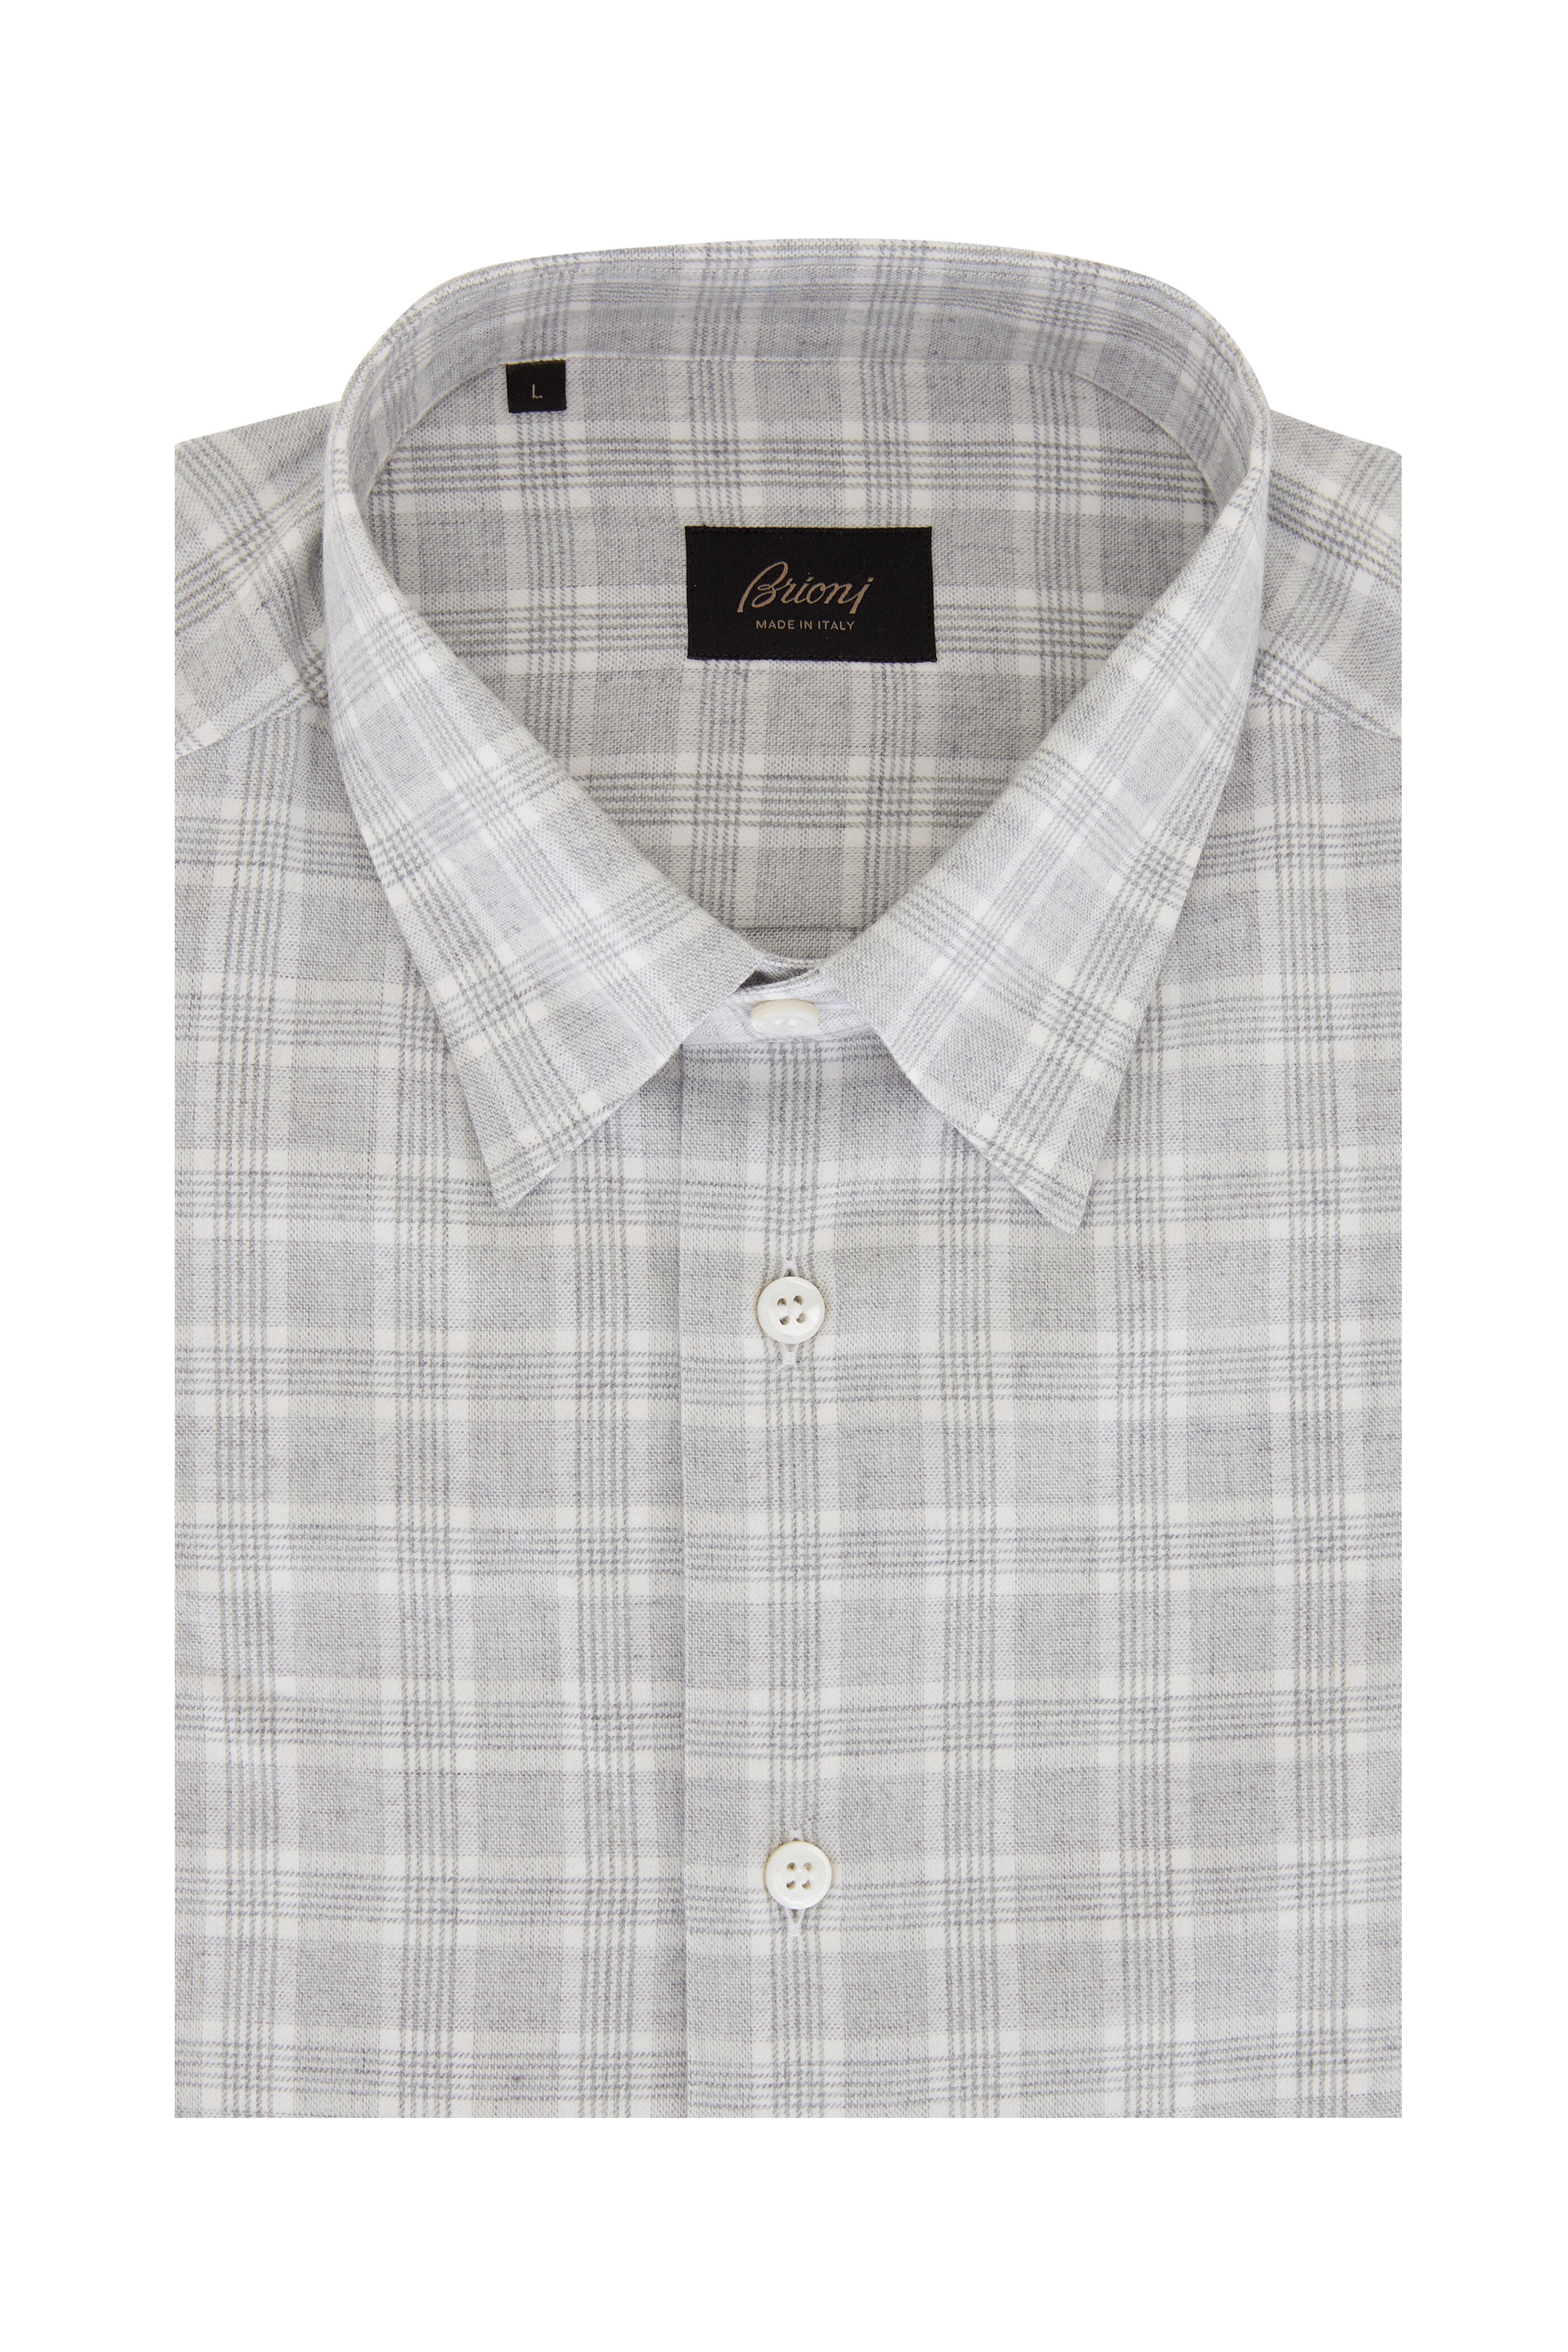 Brioni - Gray & White Plaid Cotton & Cashmere Sport Shirt